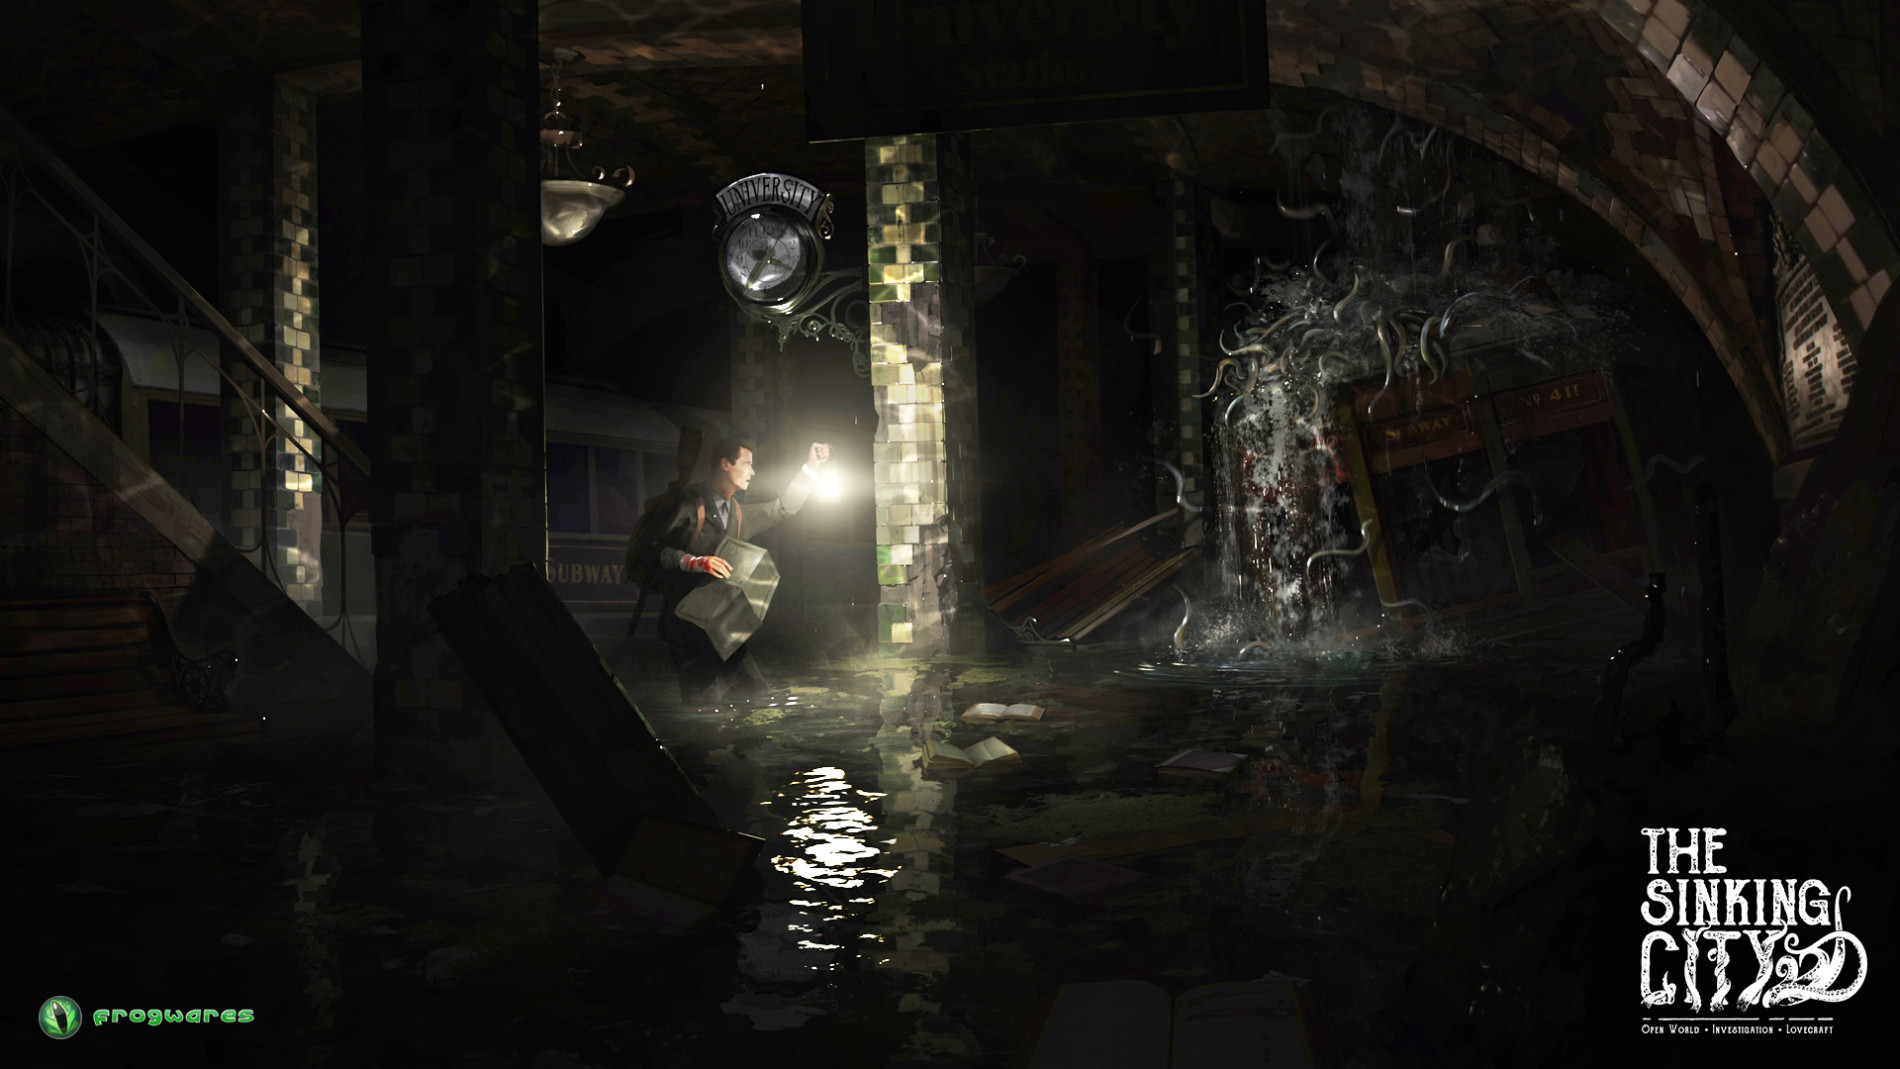 Fine Art: Lovecraftian Terror, Sculpted For A Video Game